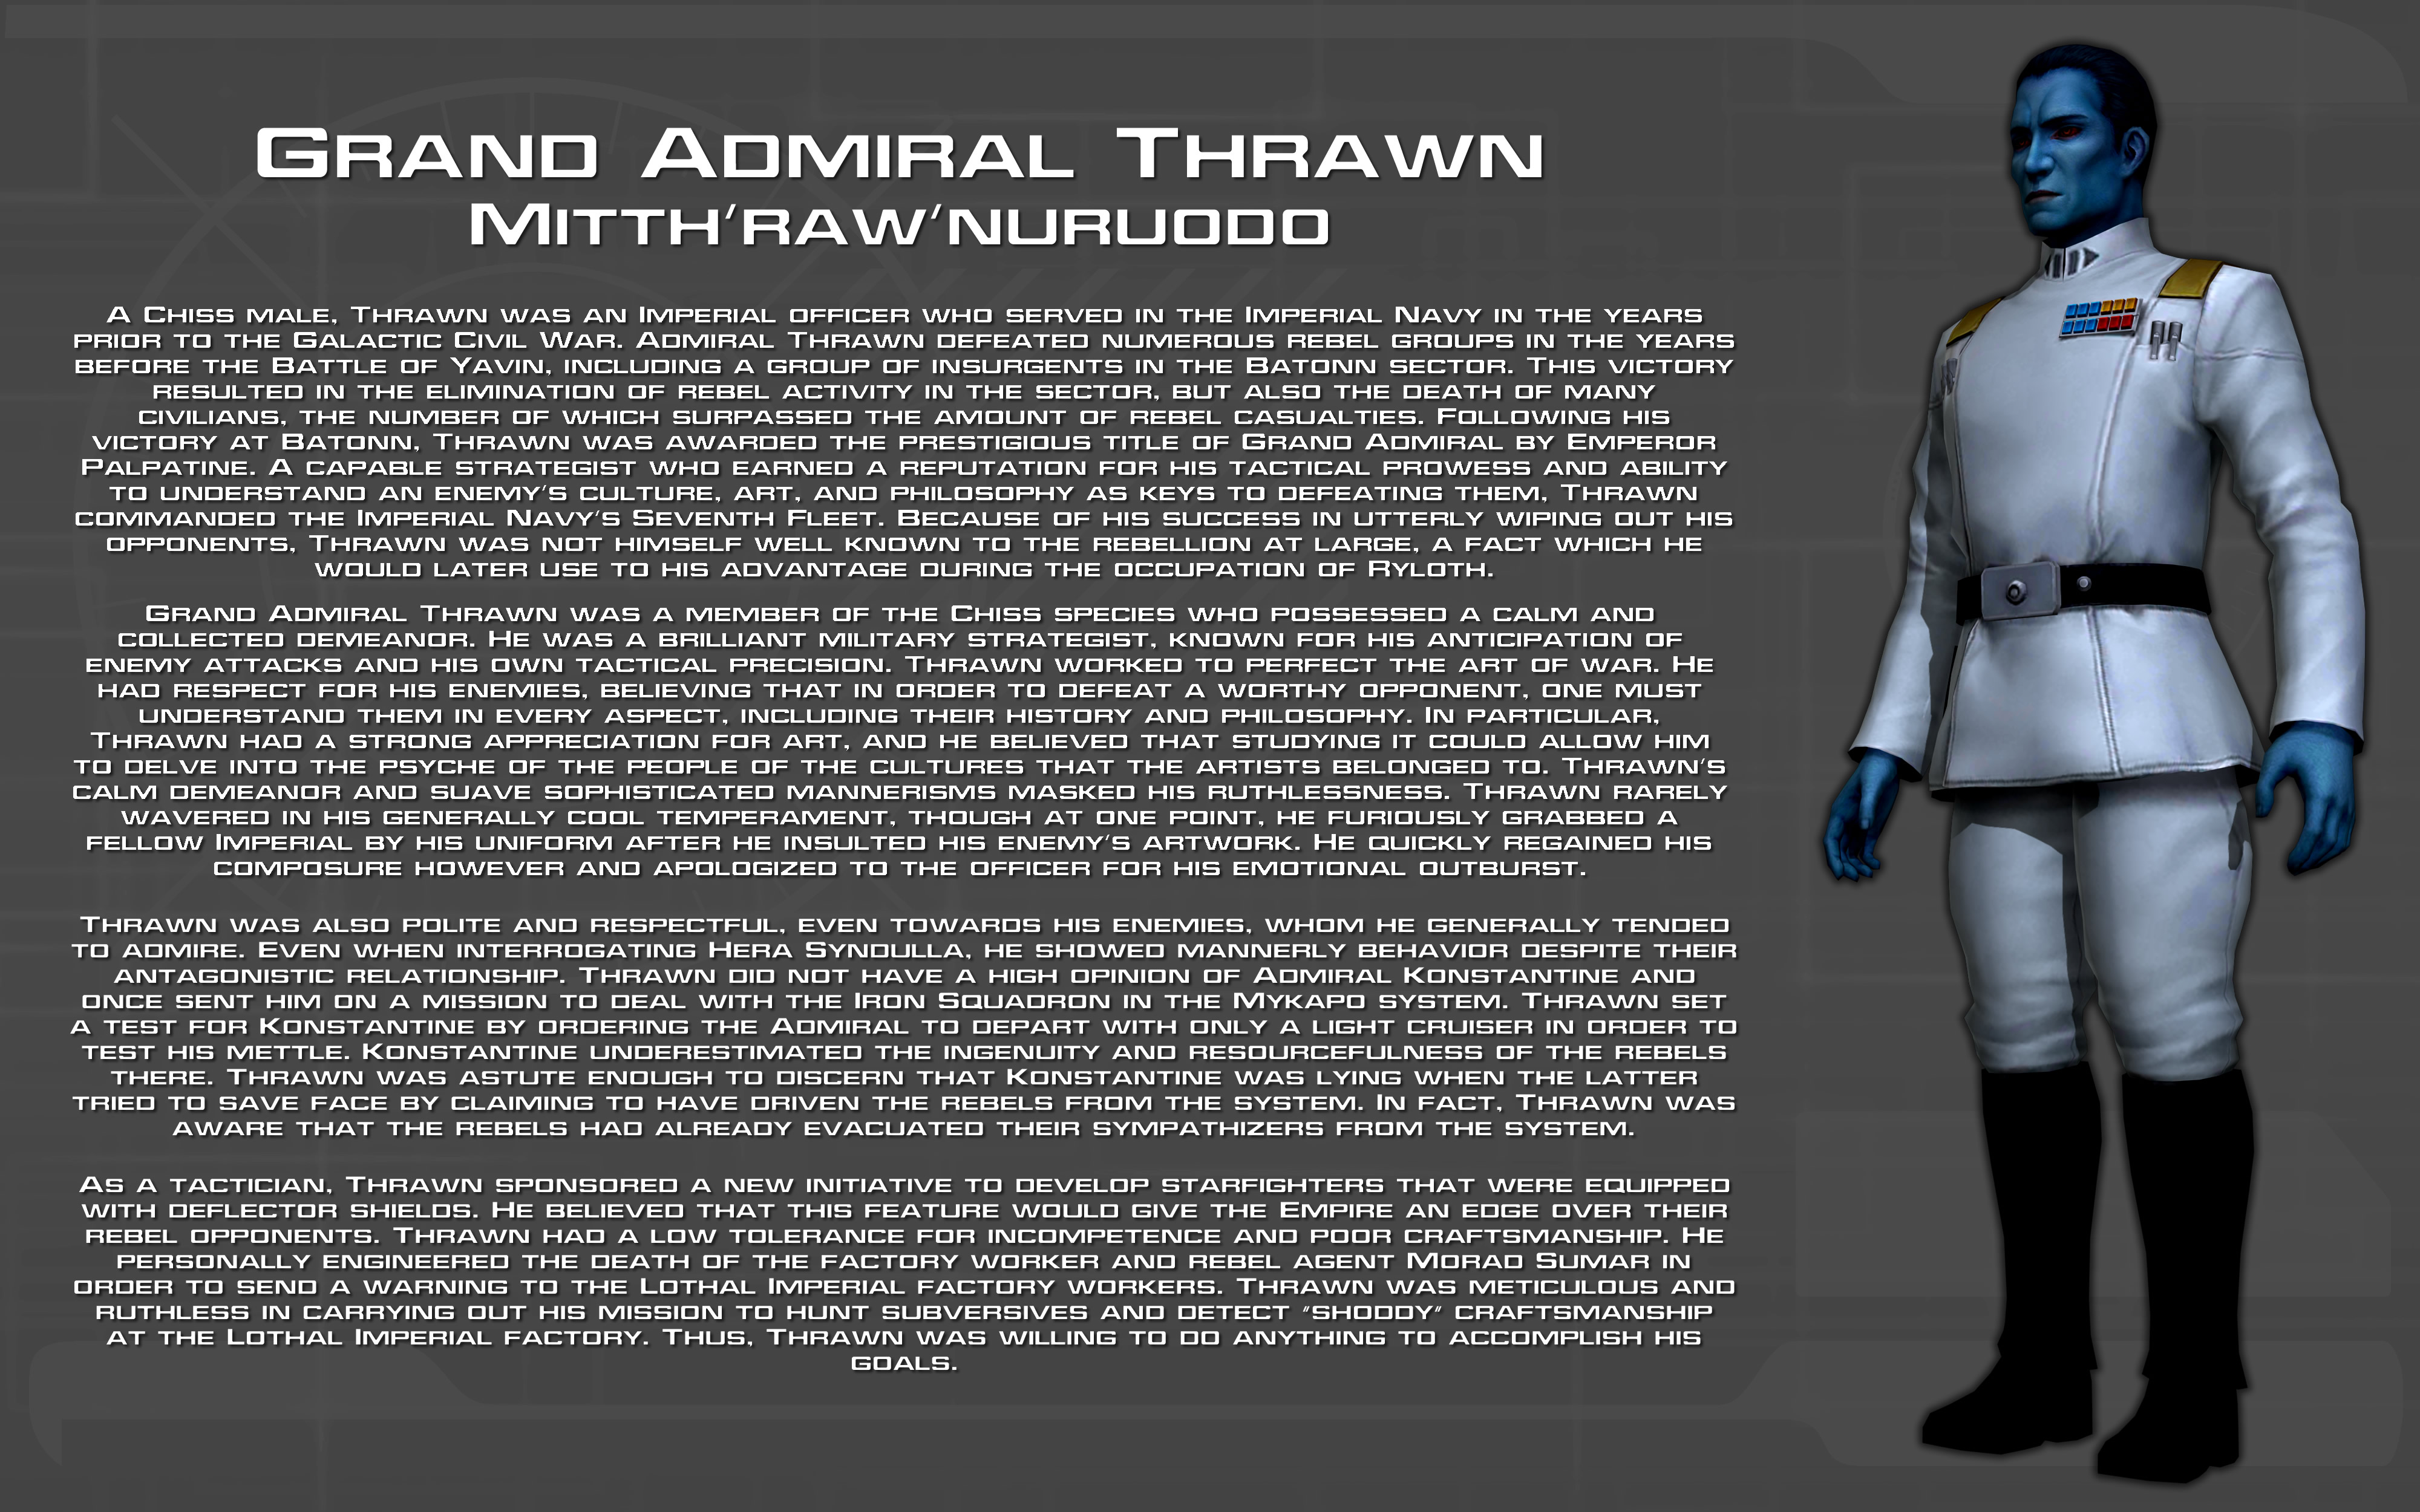 Grand Admiral Thrawn character bio [New]